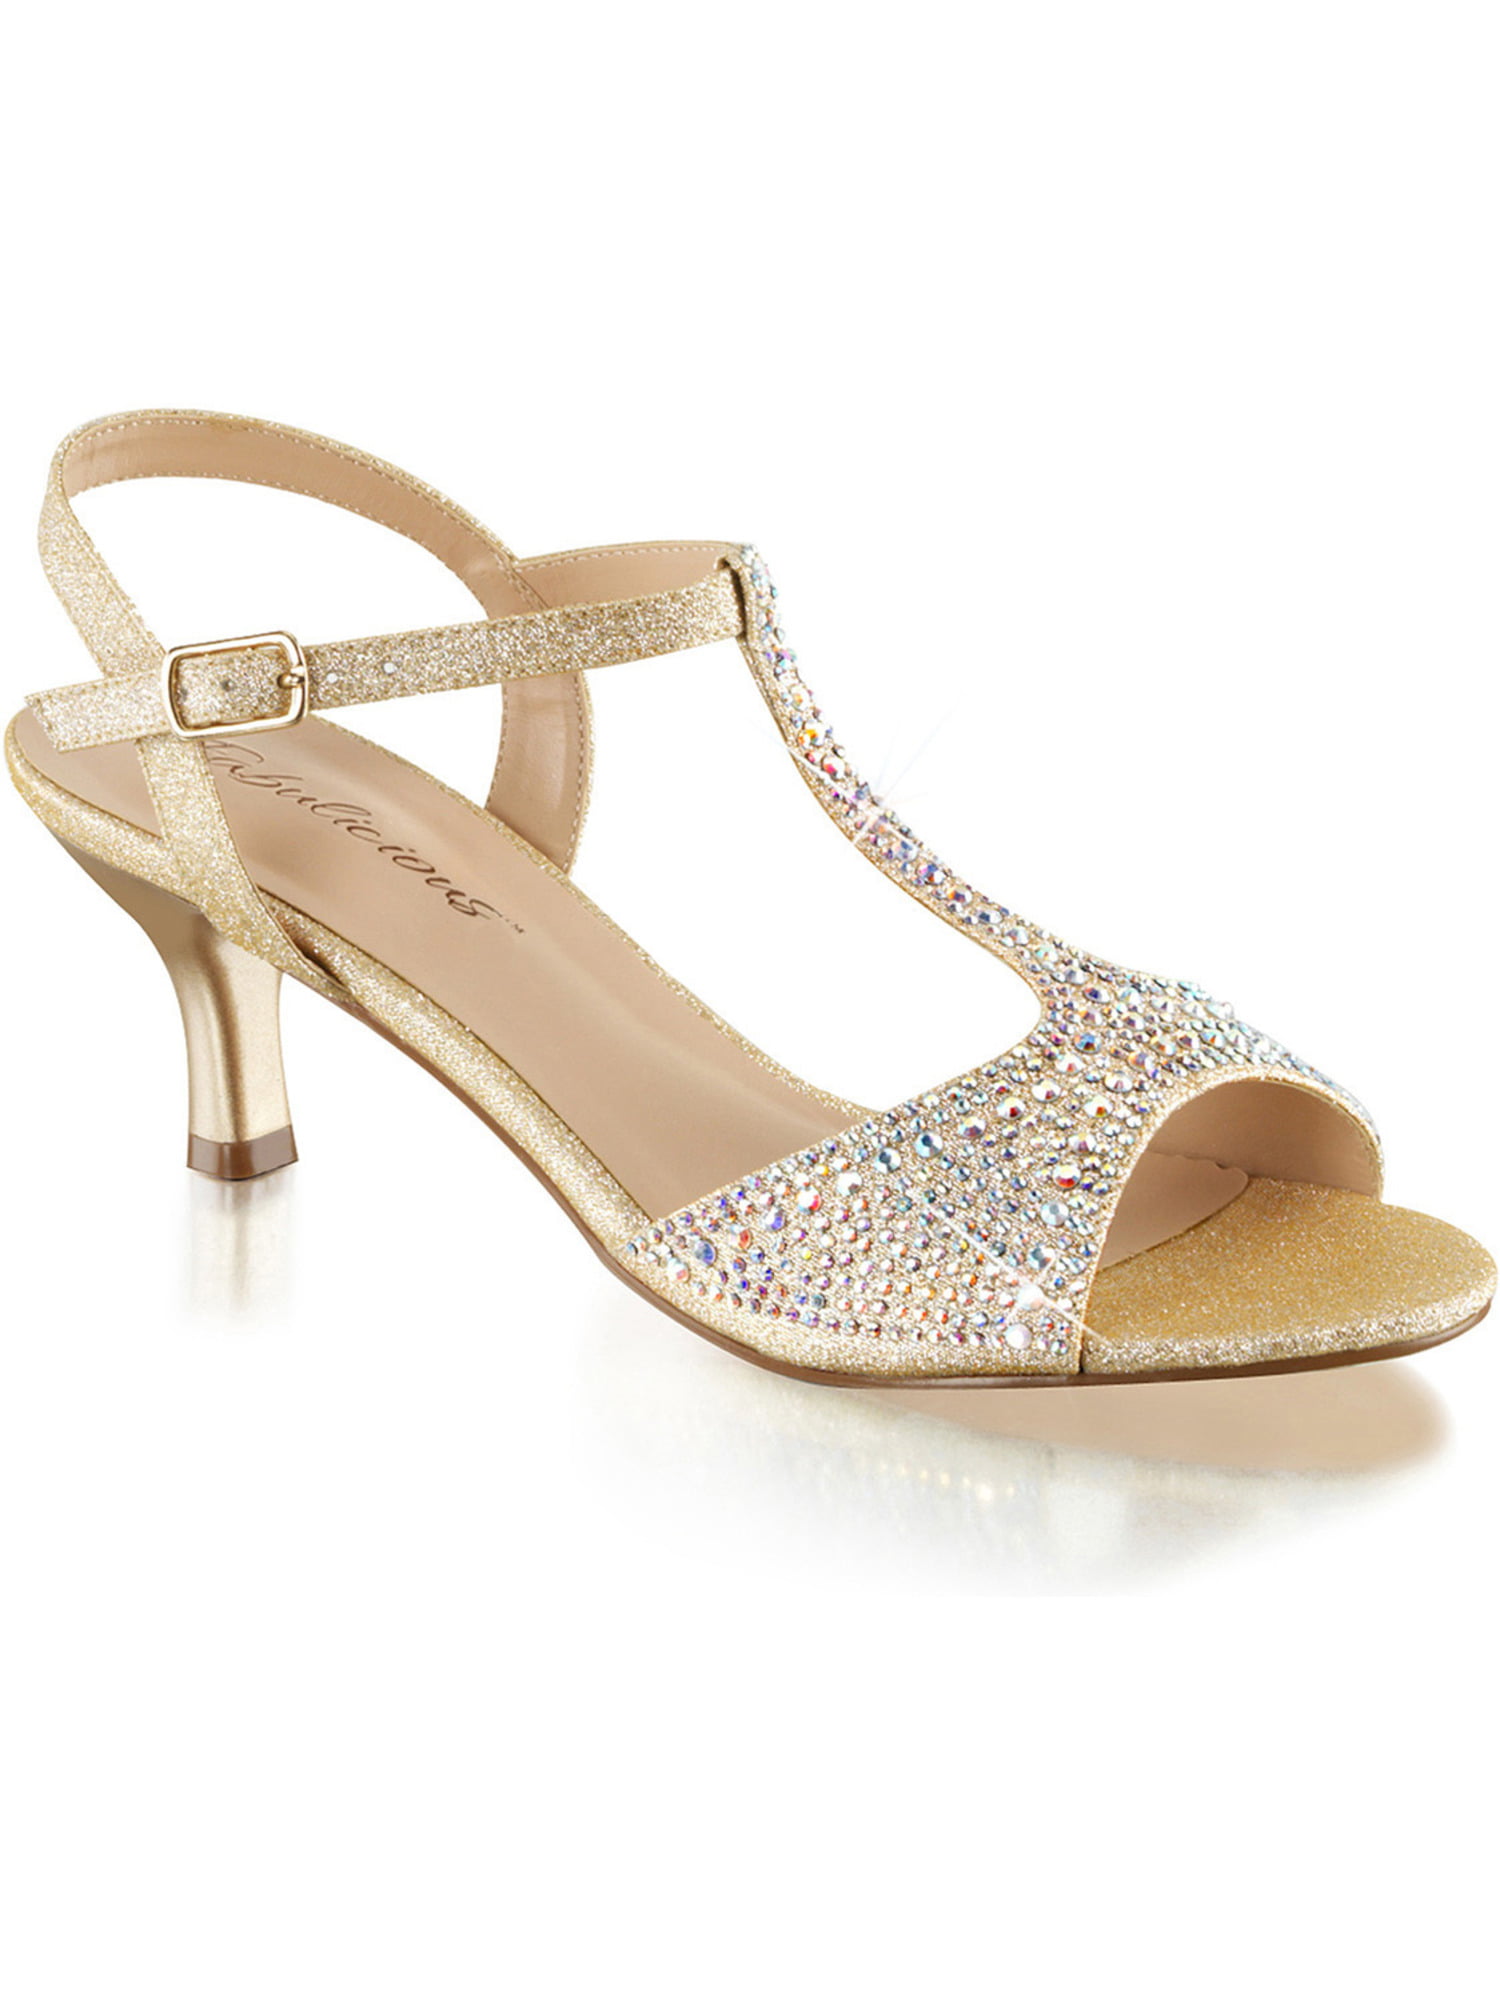 sparkly nude heels